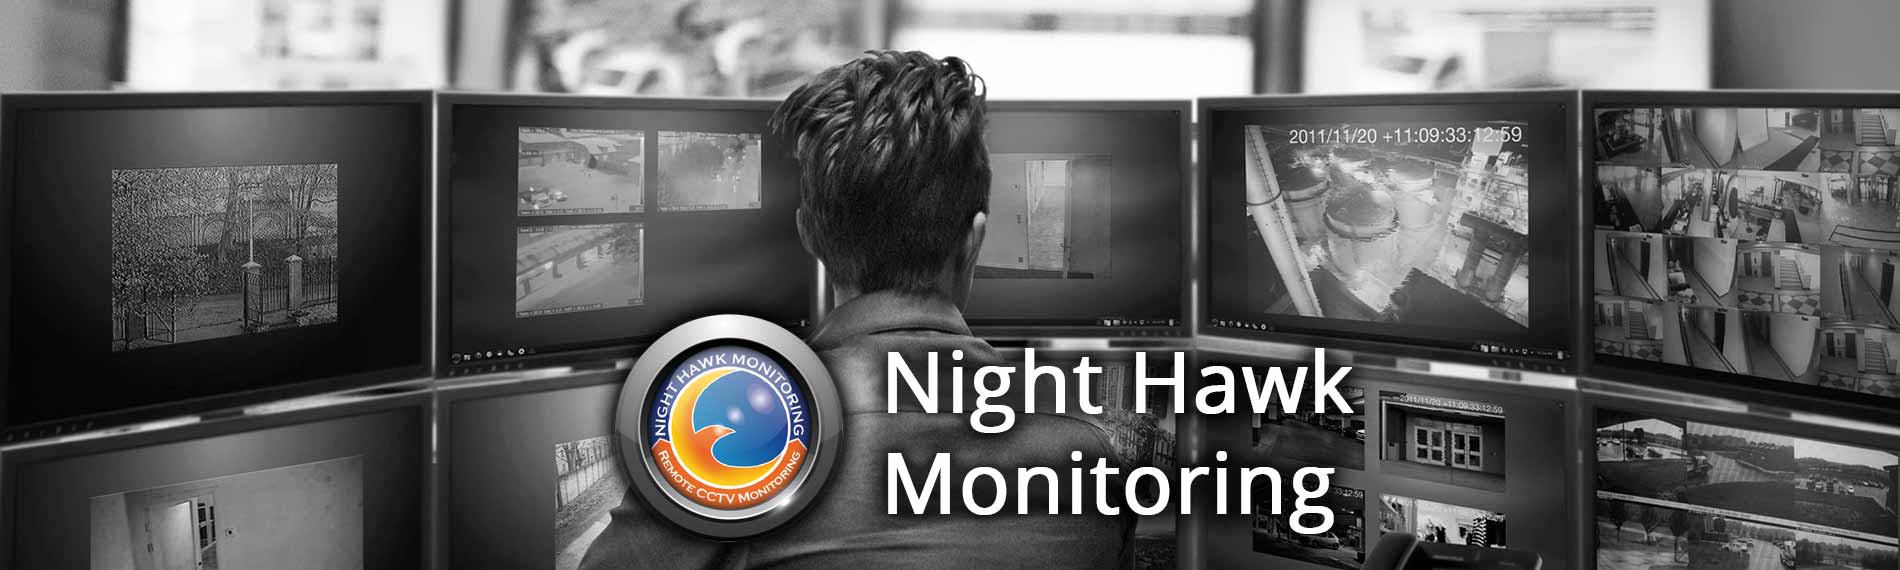 Remote Video Surveillance Boca Raton - Live Security Cameras Monitoring Boca Raton Florida